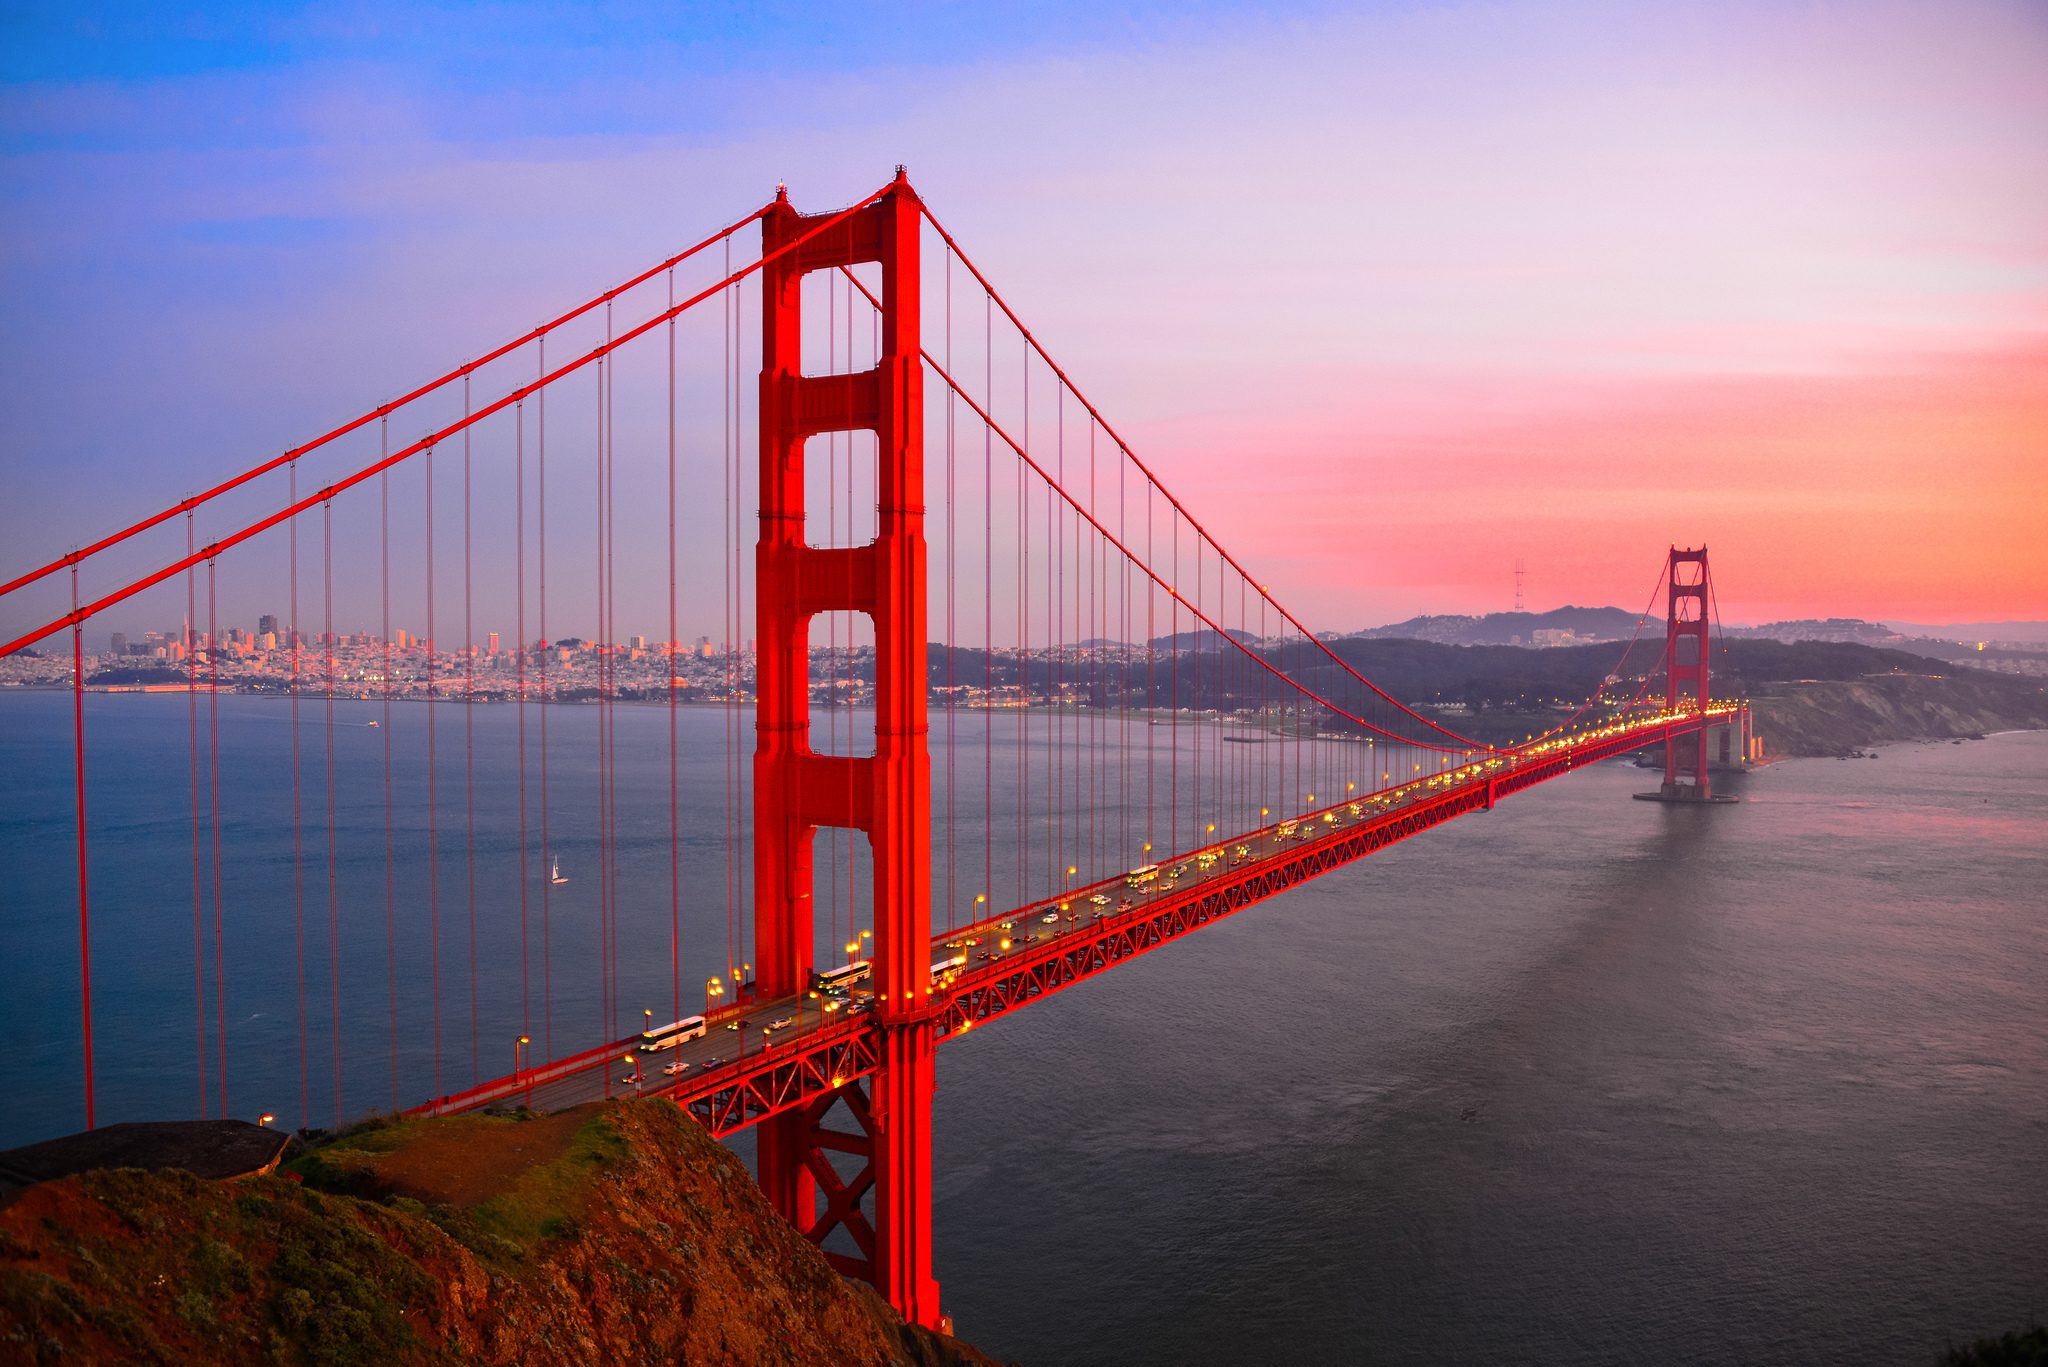 Man Made San Francisco 4k Ultra HD Wallpaper